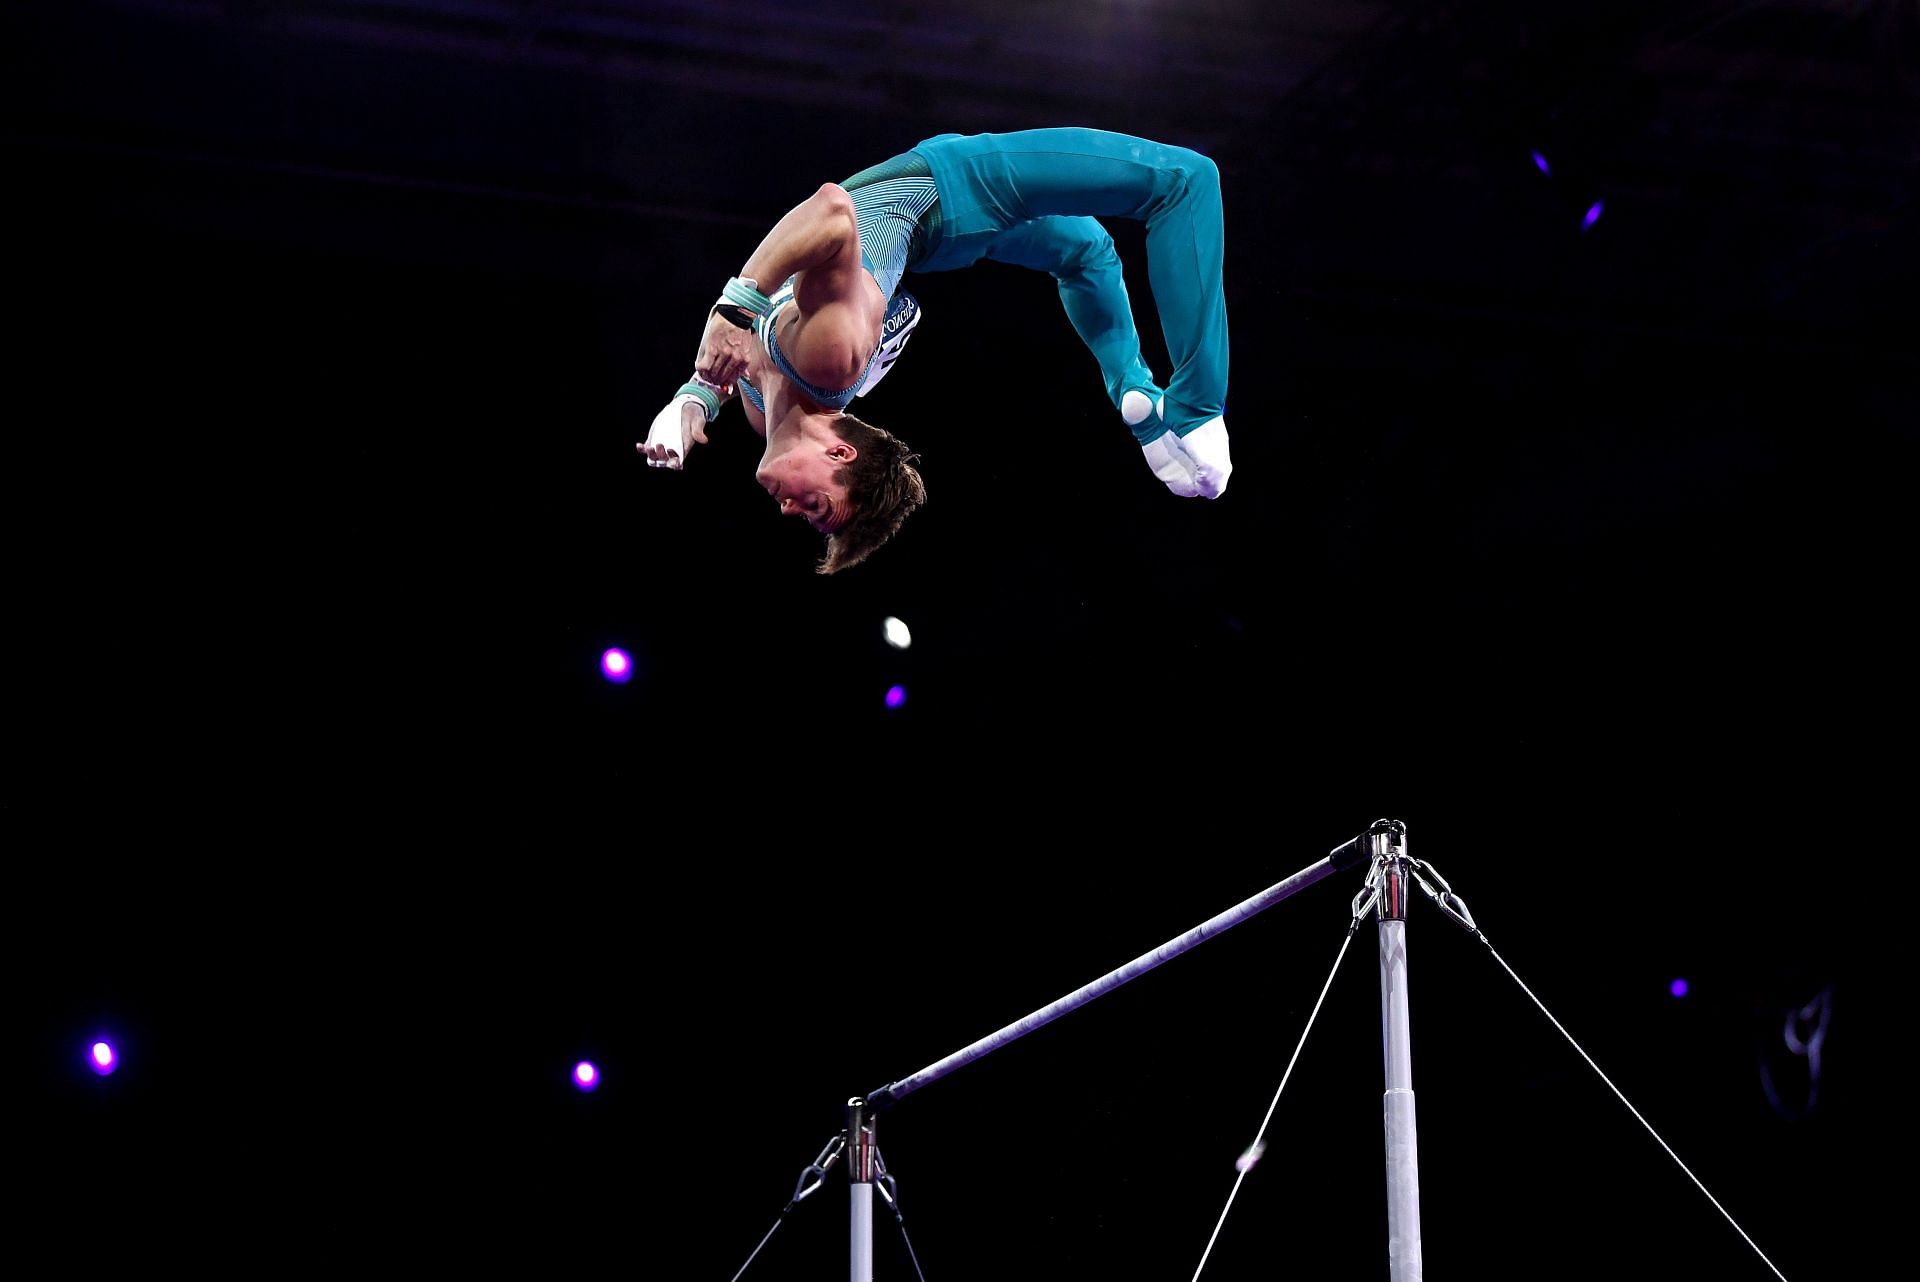 2022 World Artistic Gymnastics Championships Dates, schedule, where to